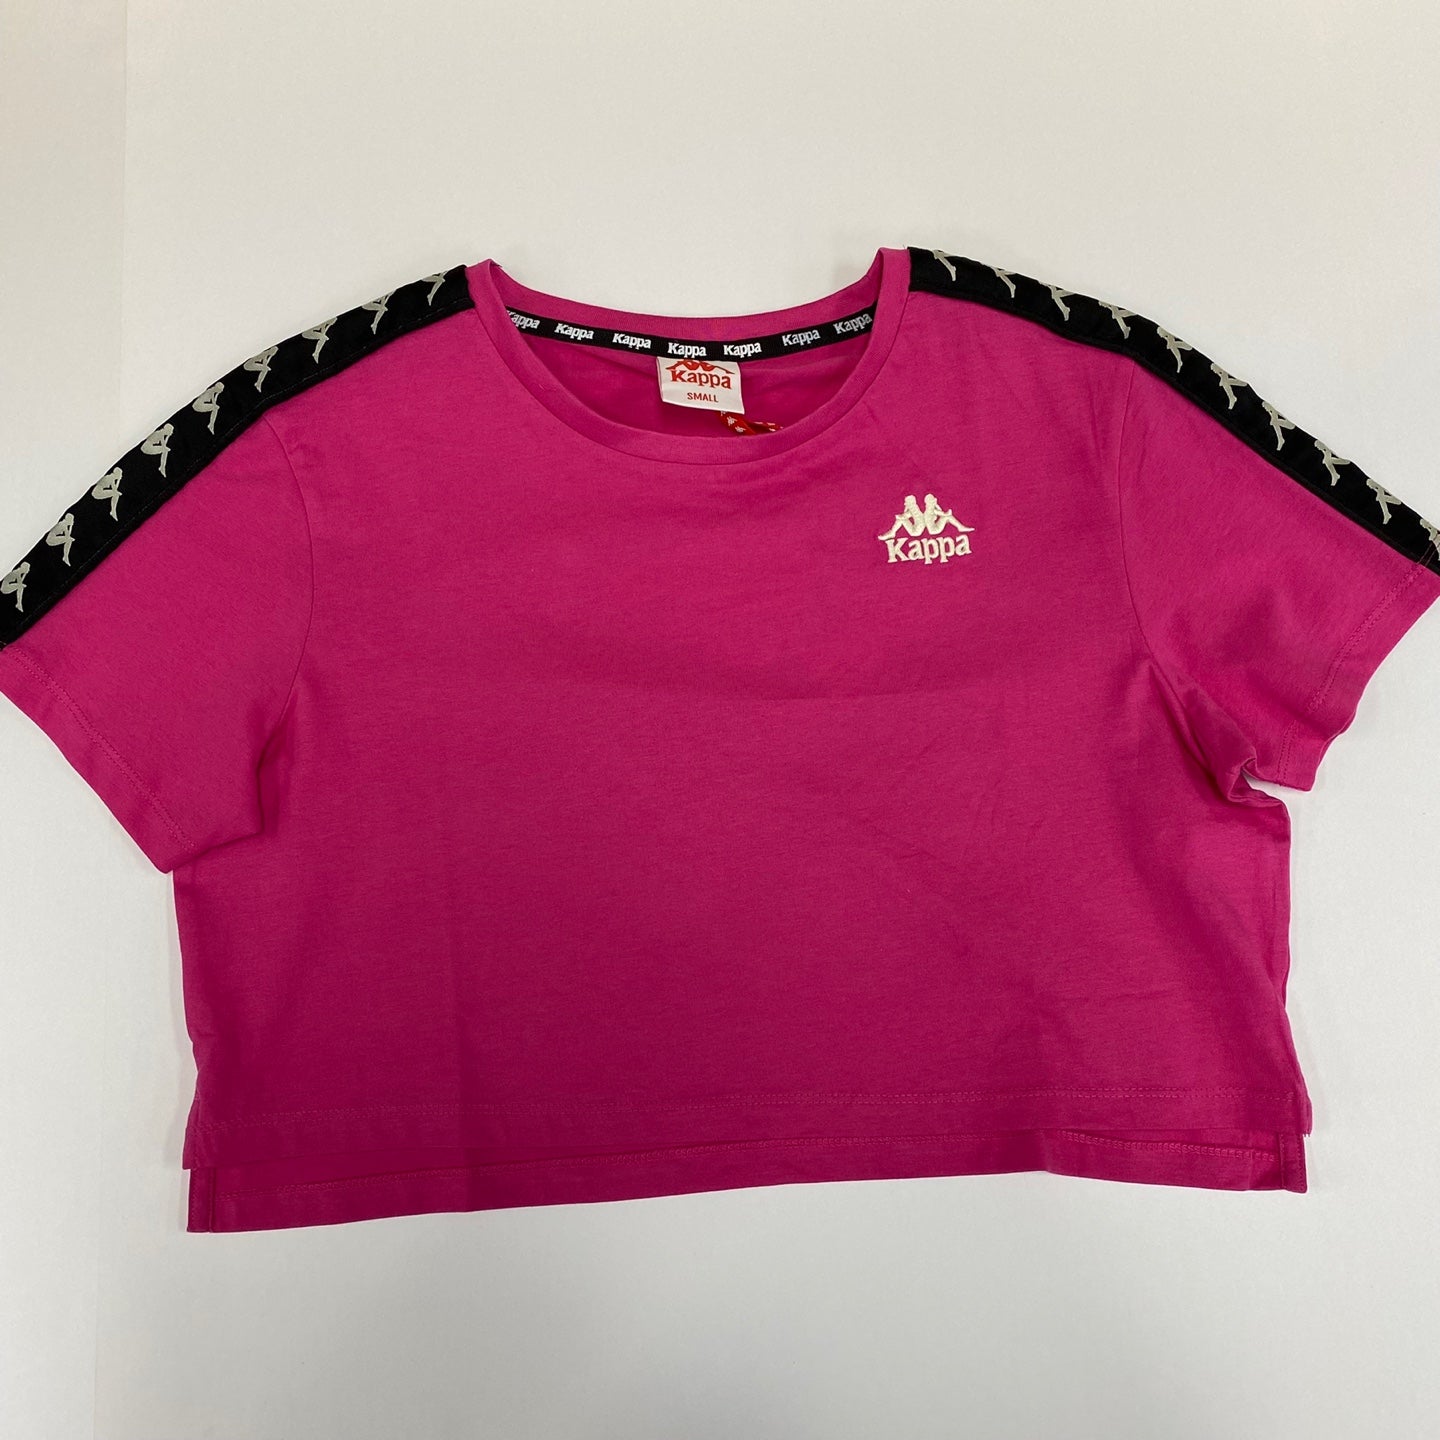 KAPPA Banda Apua T-Shirt - Pink Black